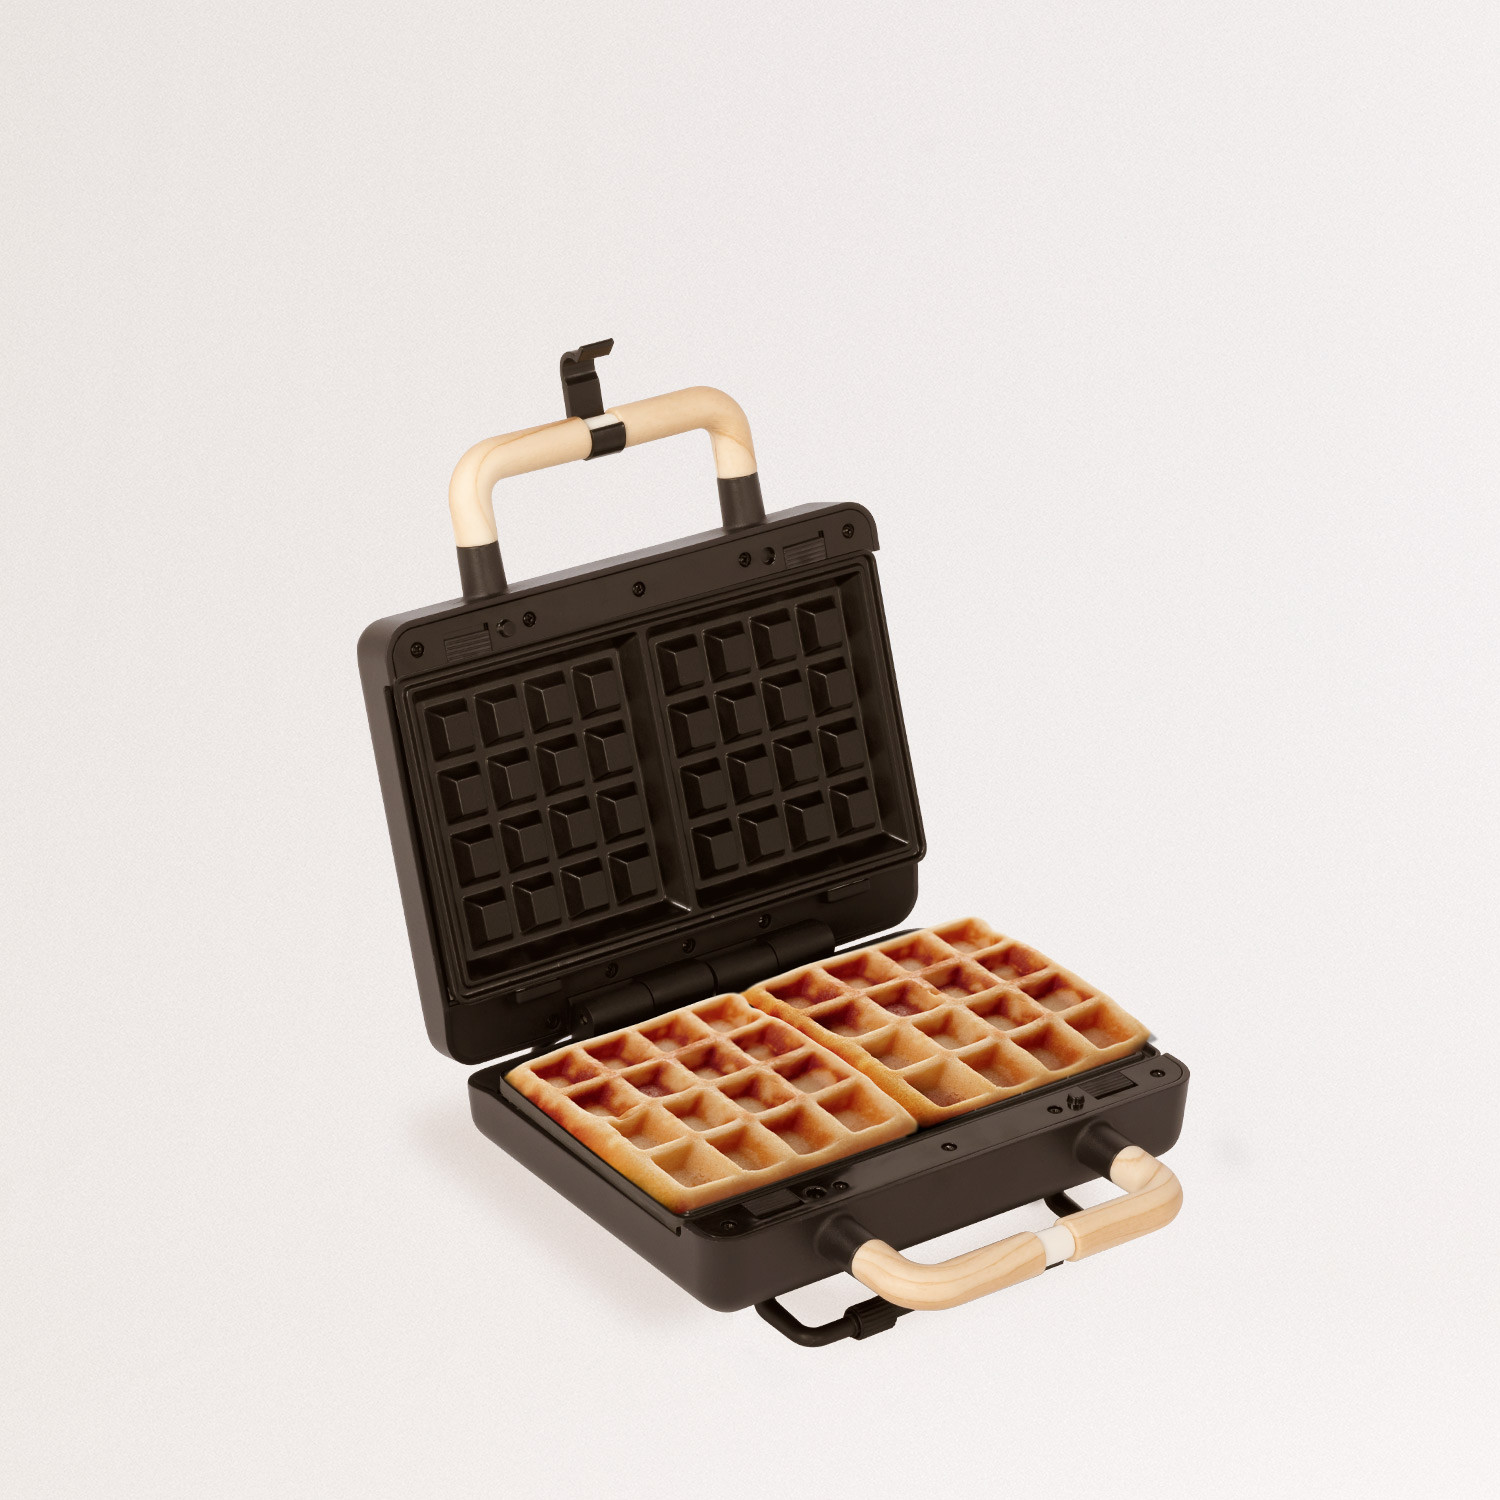 Sandwichera Create negra grill y gofrera de placas intercambiables - STONE  2 in 1 COMPACT TU - goon